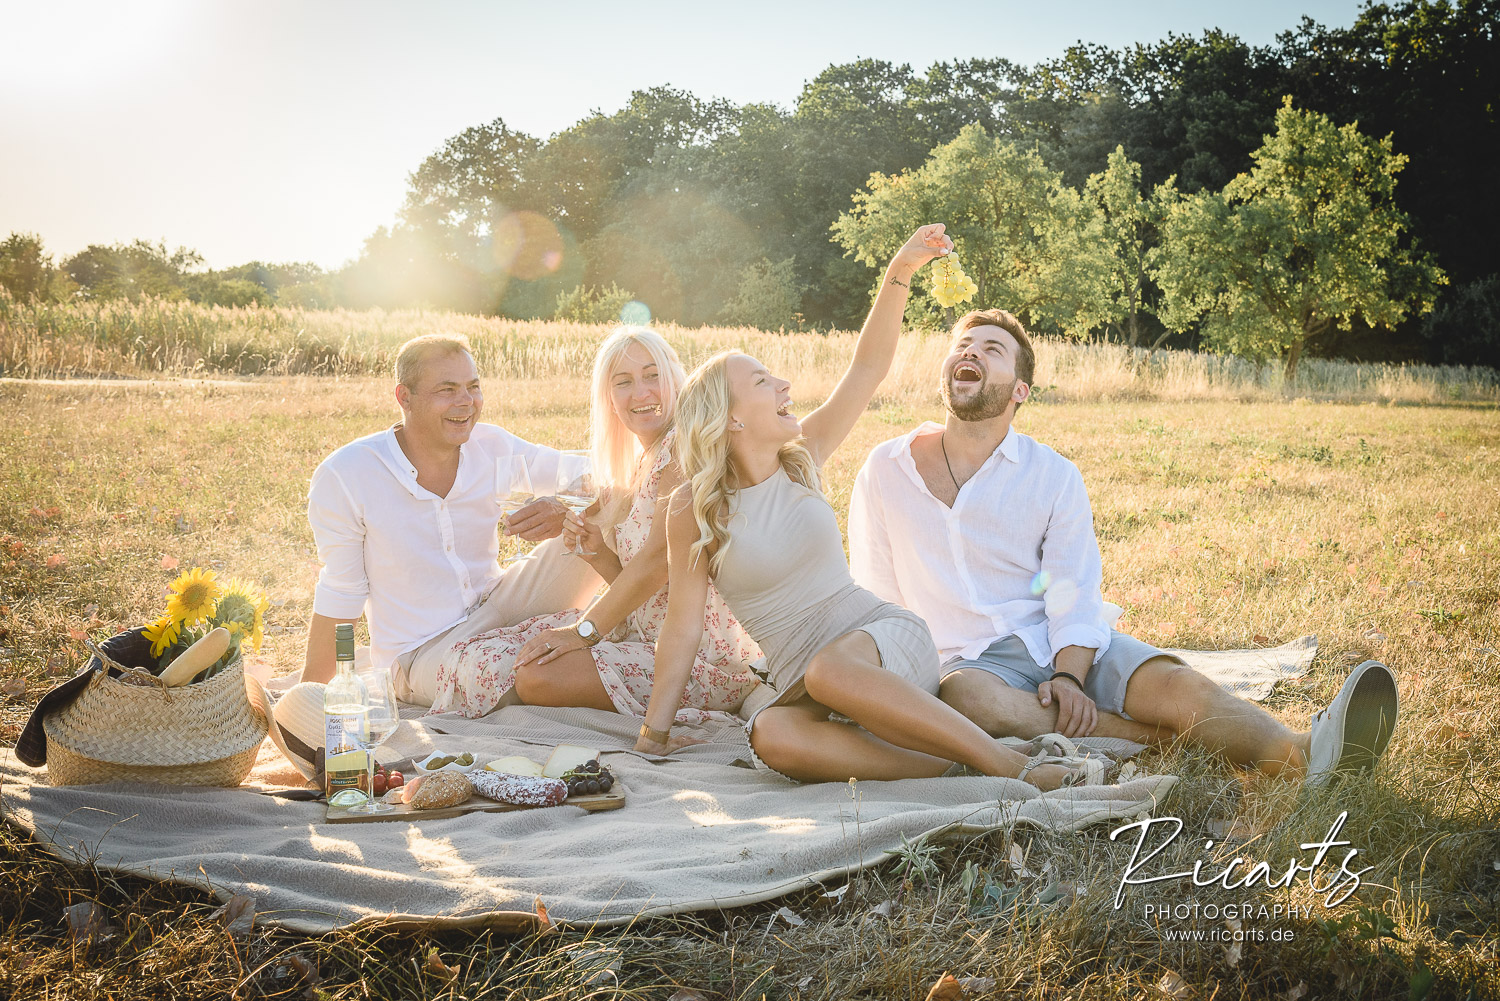 Familienfoto-Picknick-auf-Sommerwiese